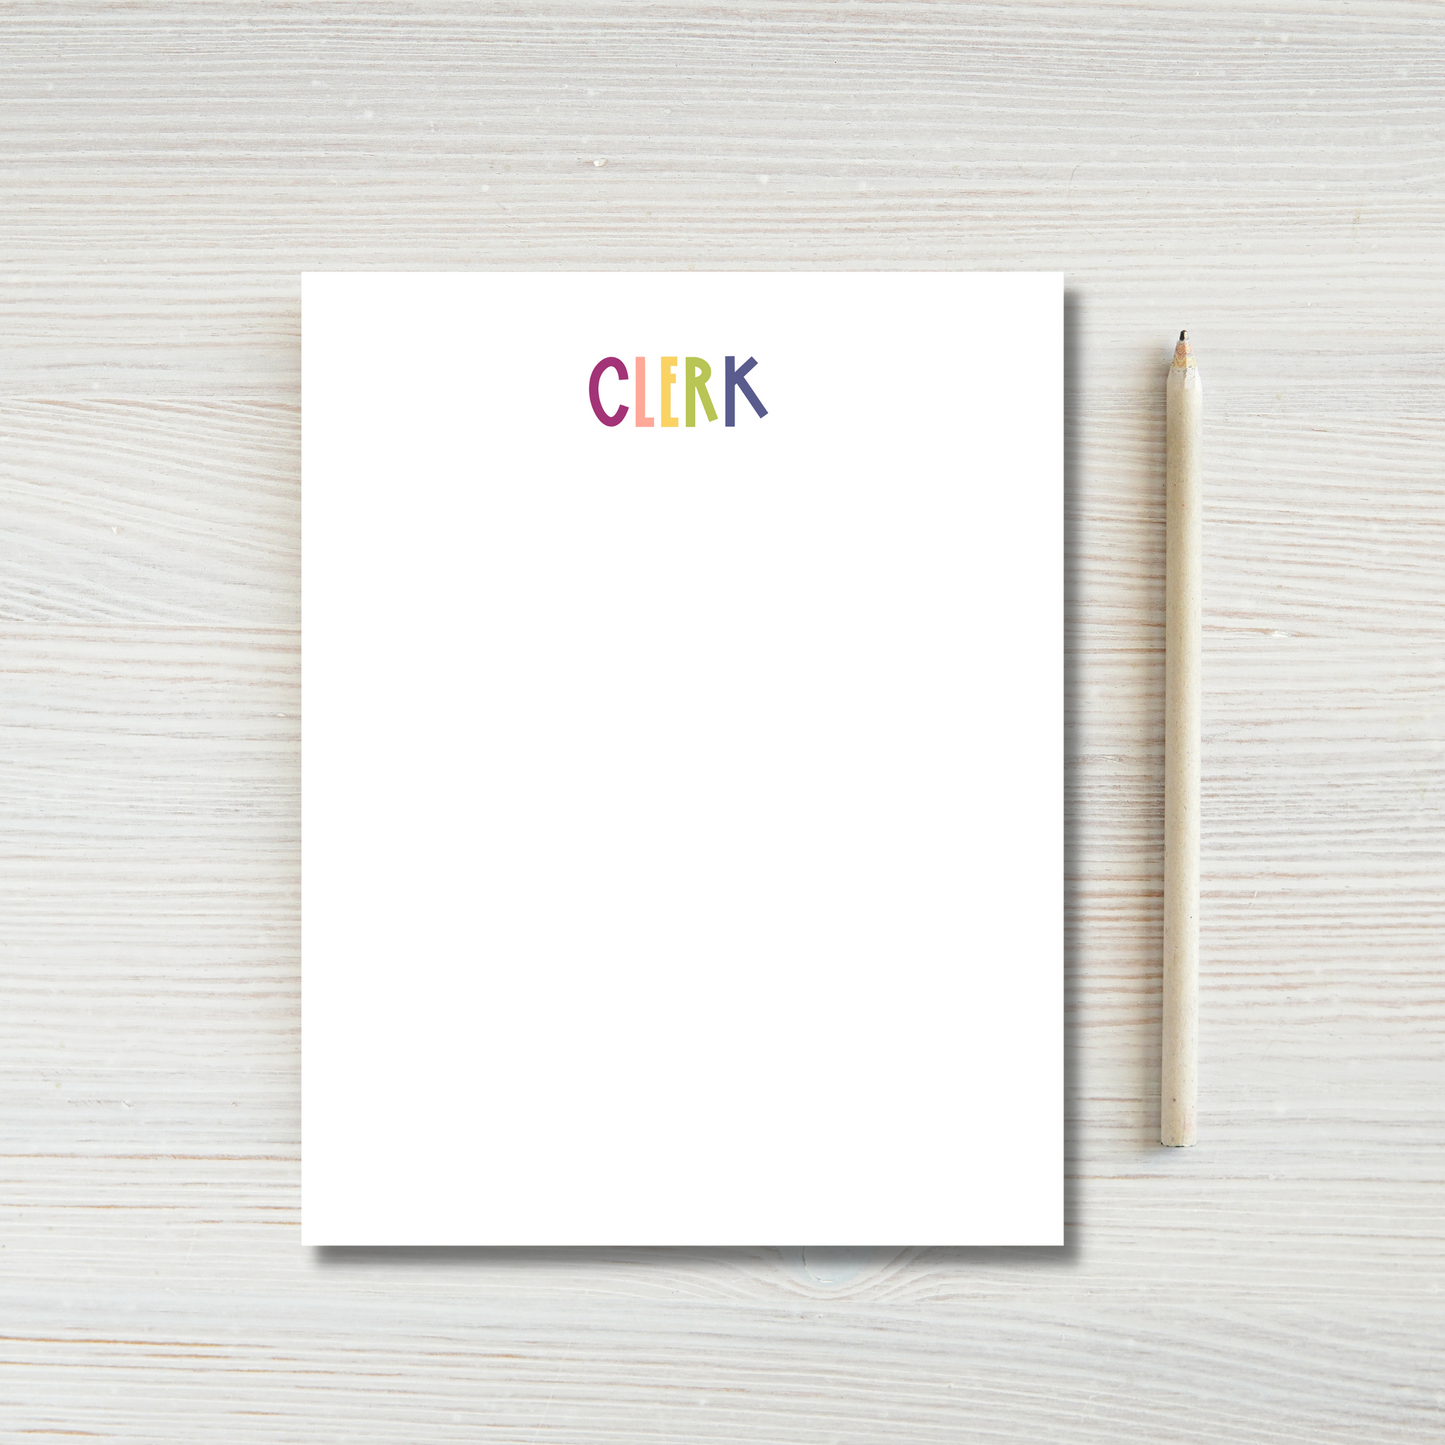 Clerk Notepad